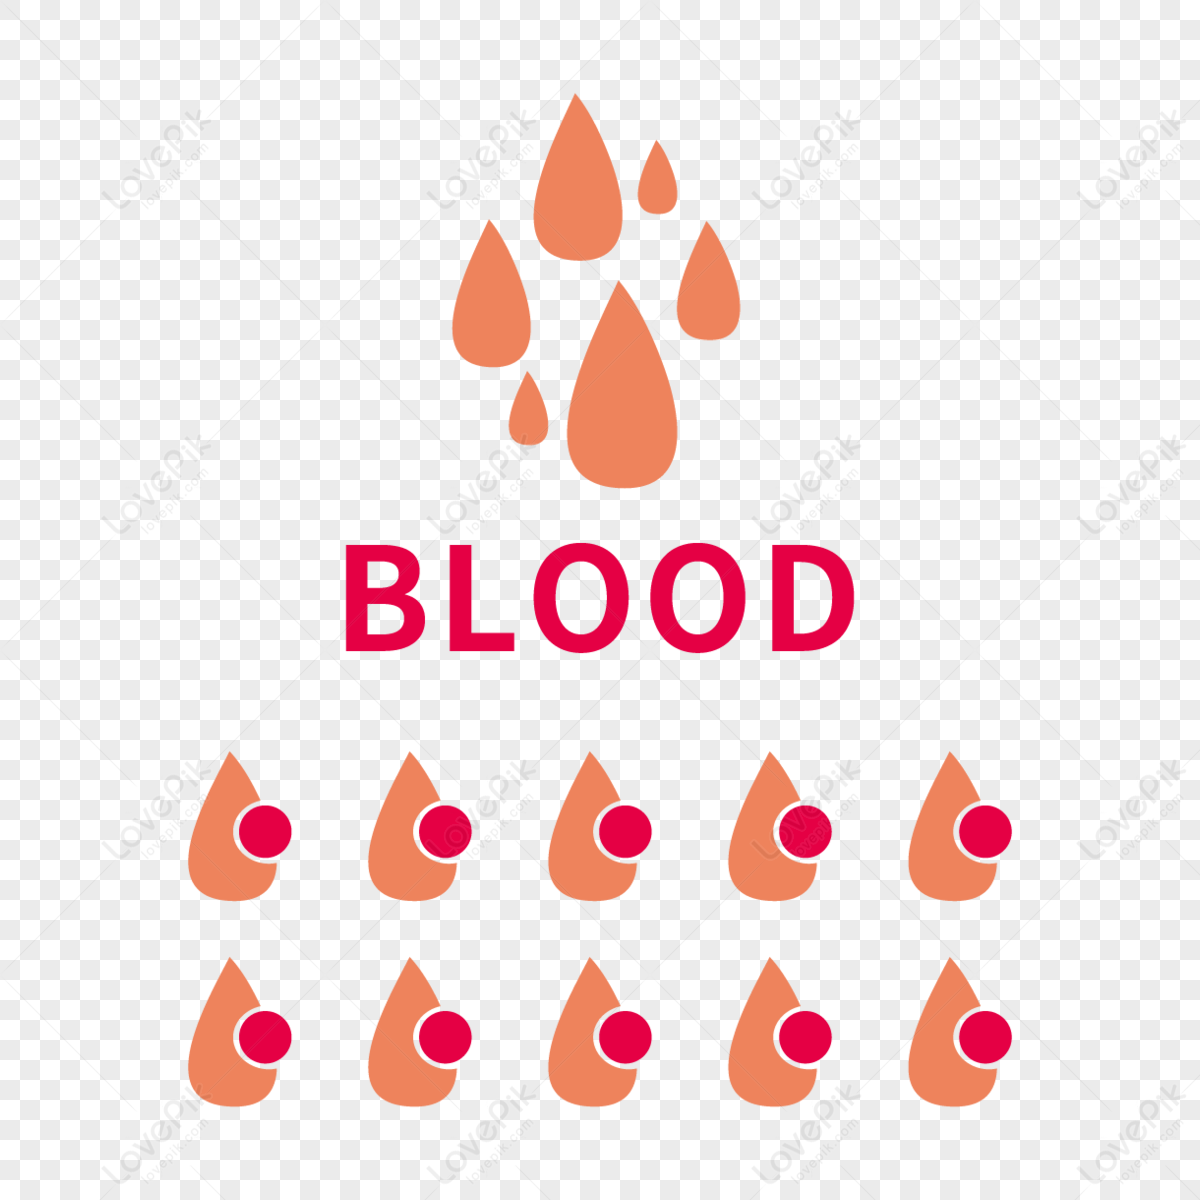 Blood type Royalty Free Vector Image - VectorStock